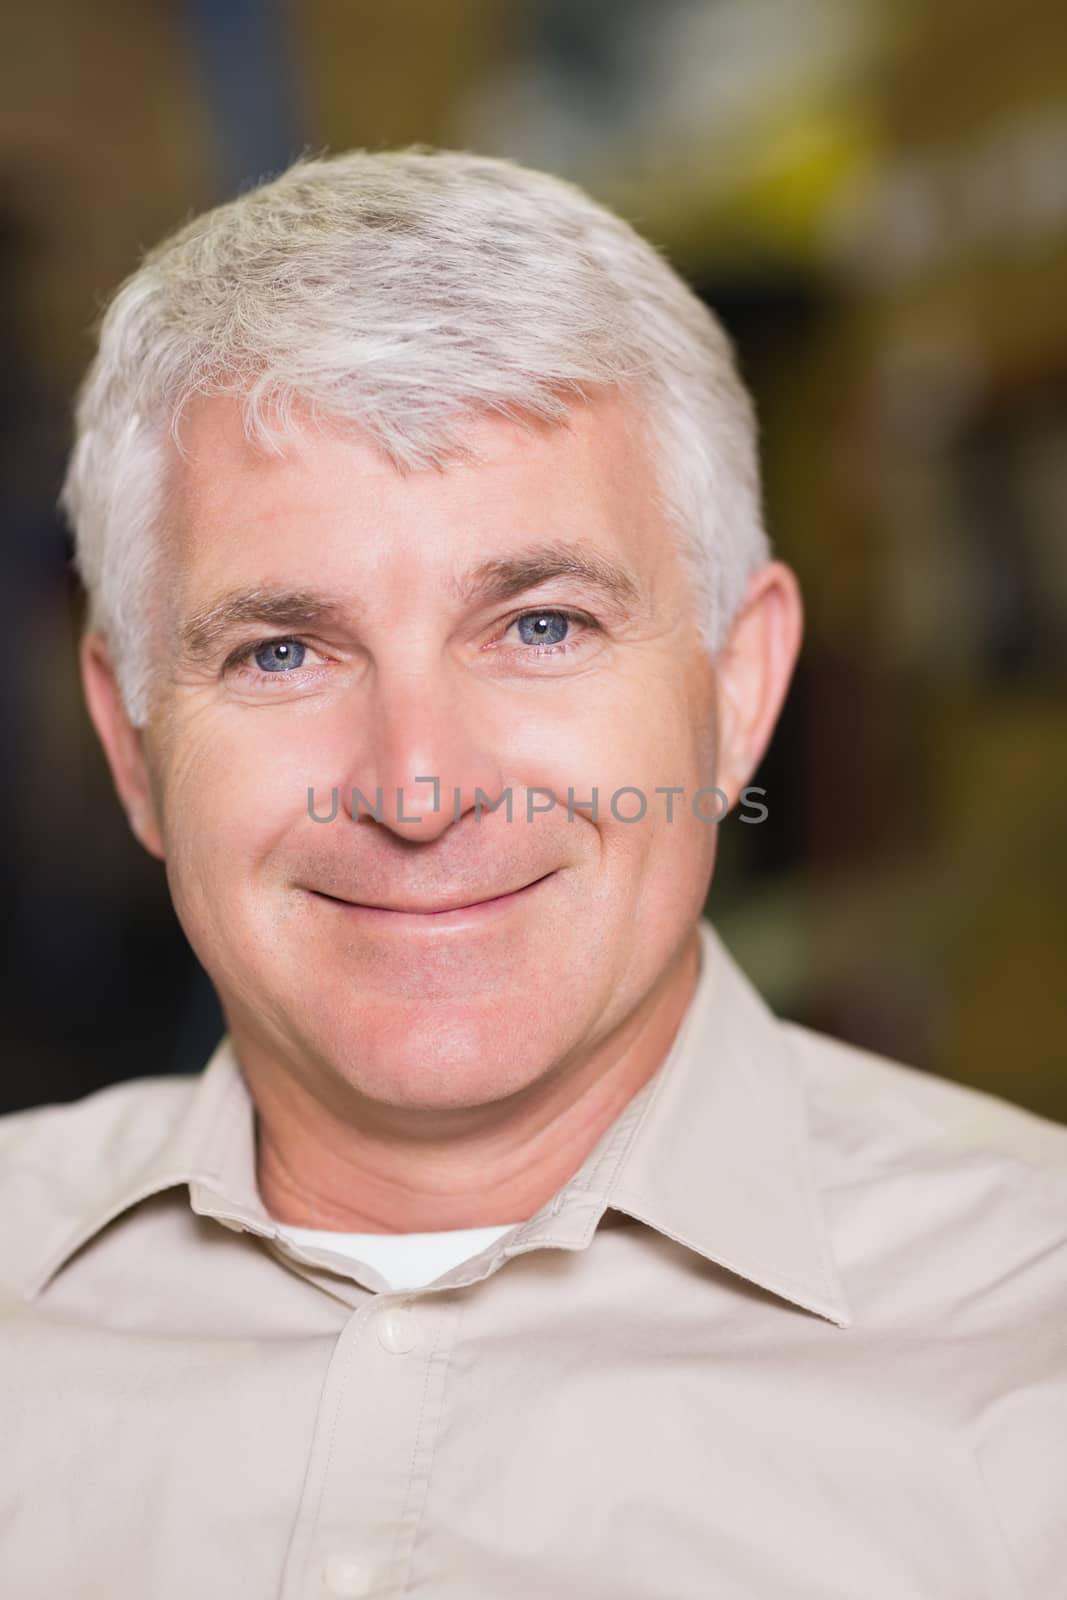 Close up portrait of smiling workman by Wavebreakmedia